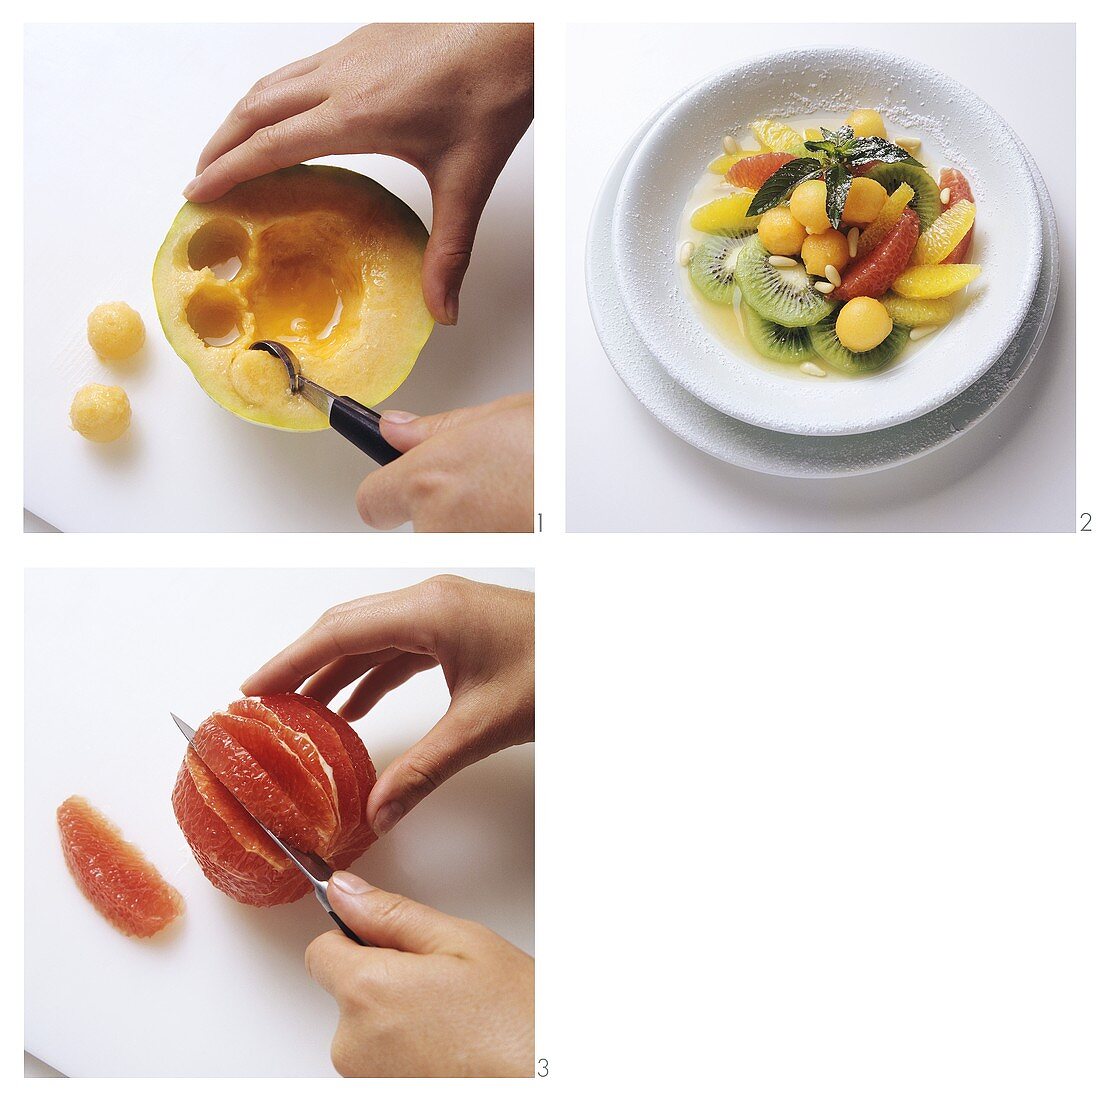 Fruit Salad with Citrus Fruits